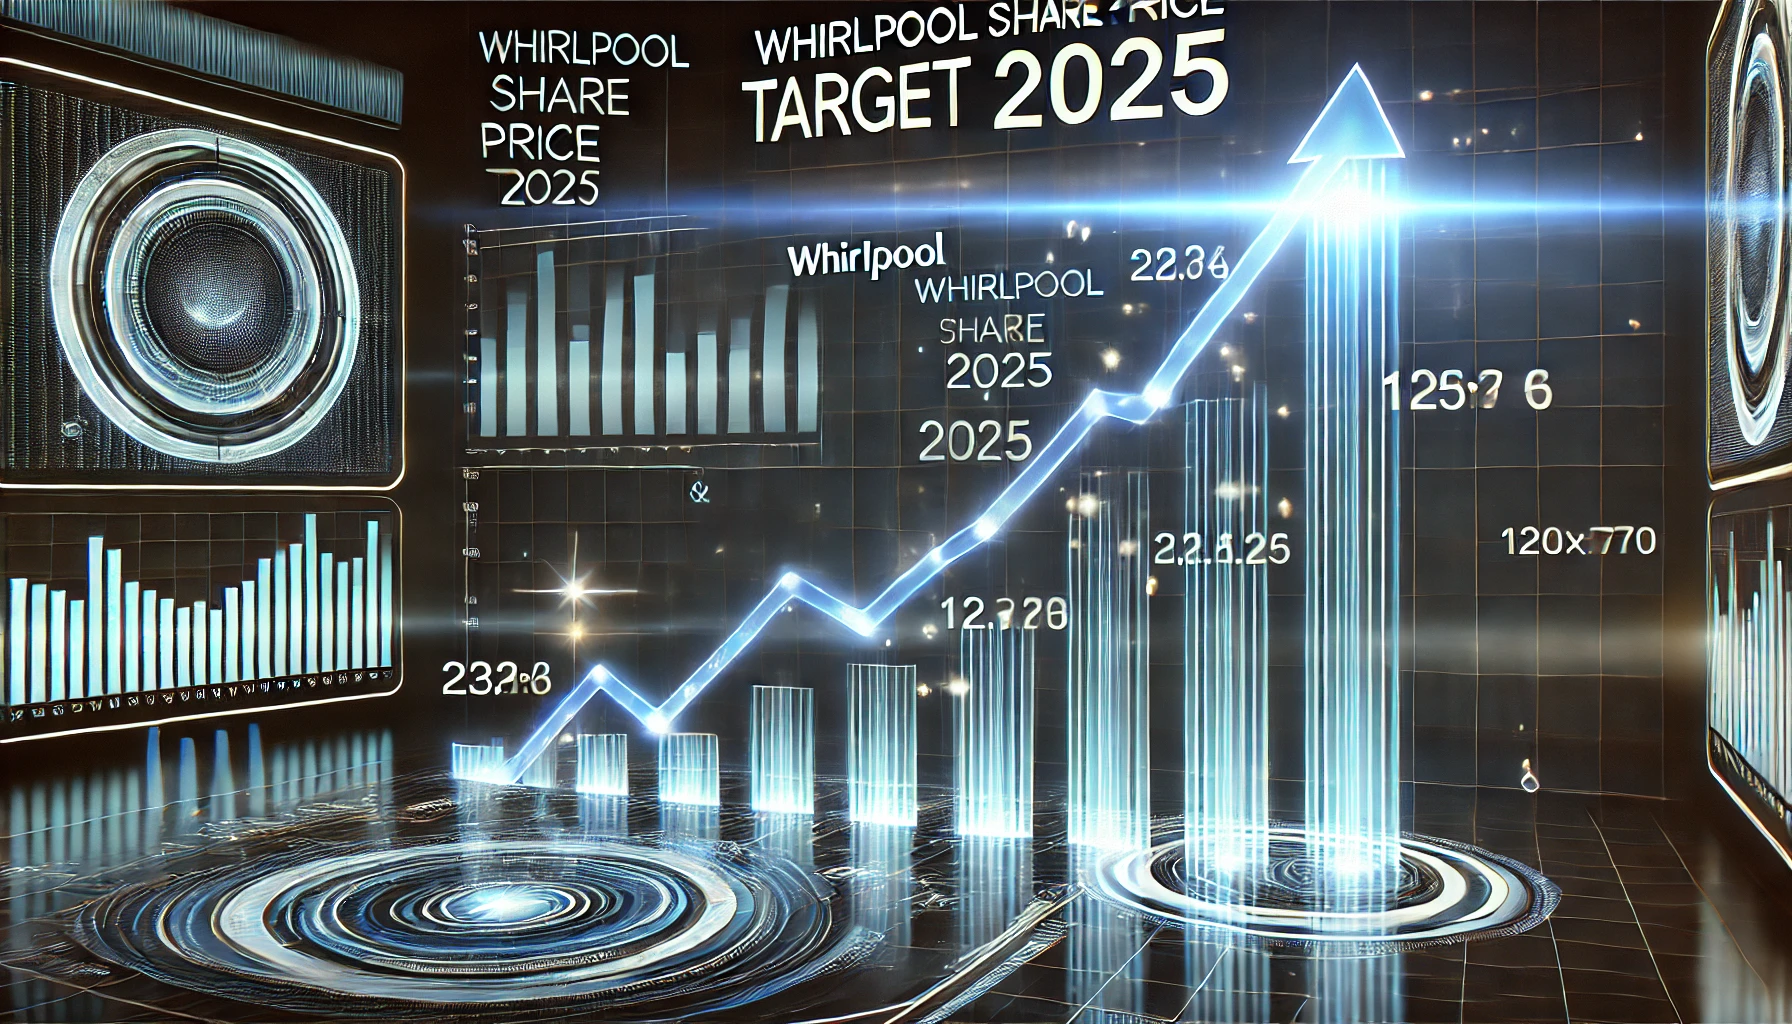 Whirlpool Share Price Target 2025